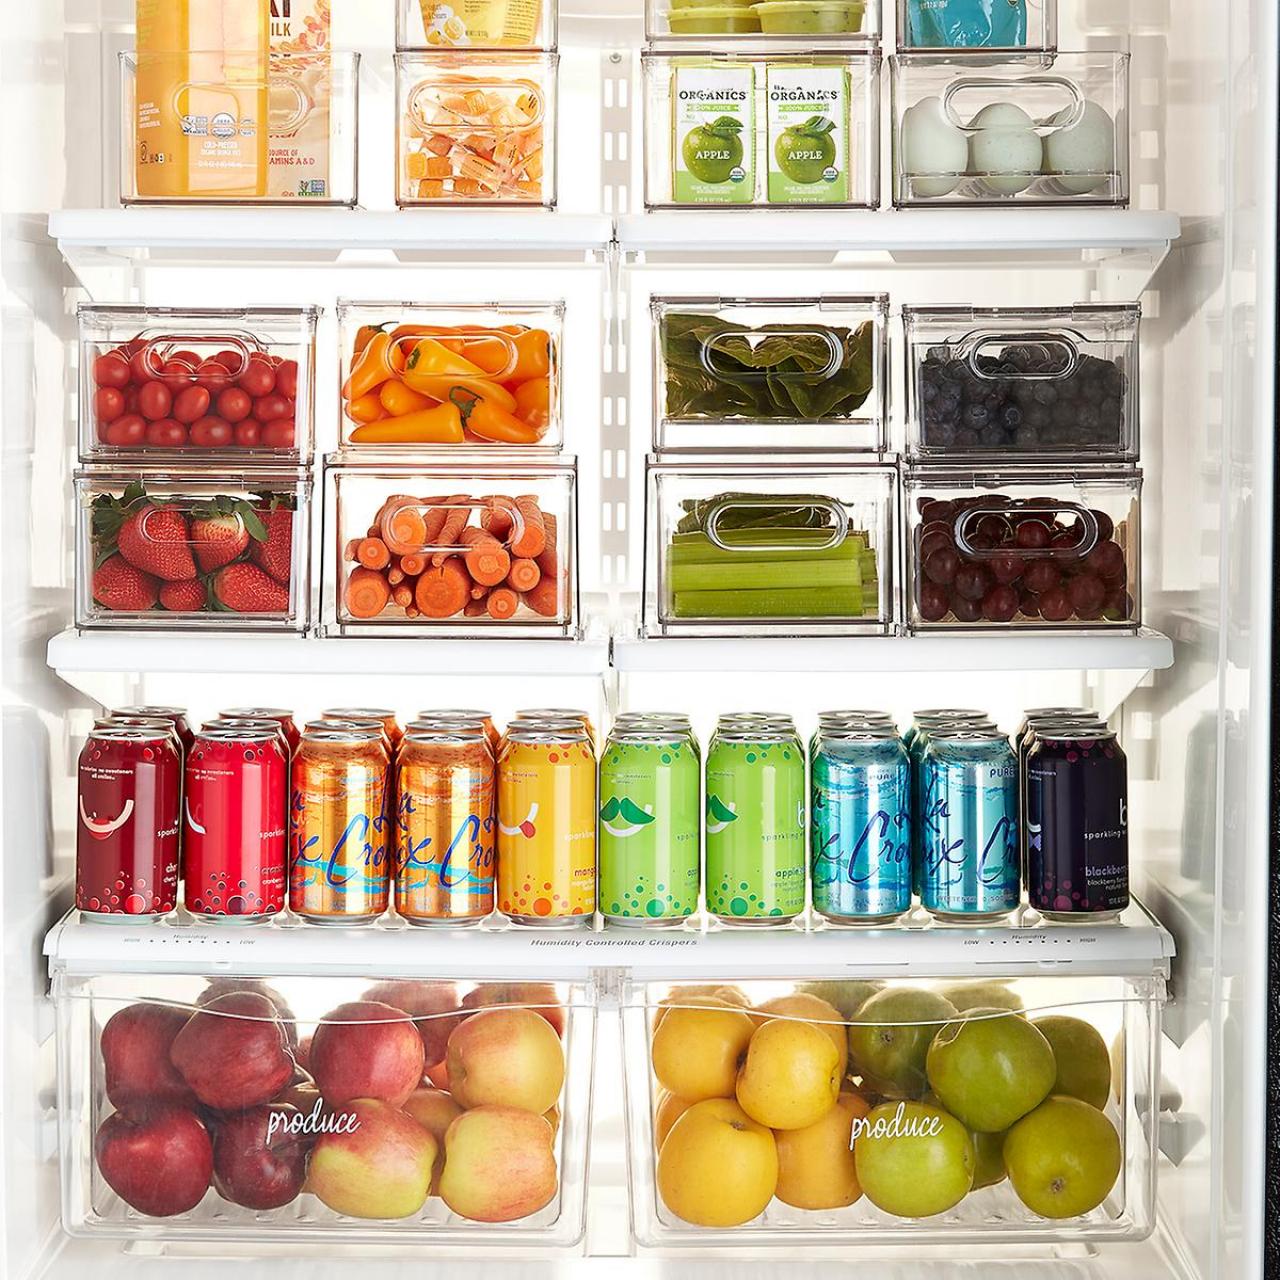 Refrigerator Organization Ideas Best, How To Keep A Fridge In Storage